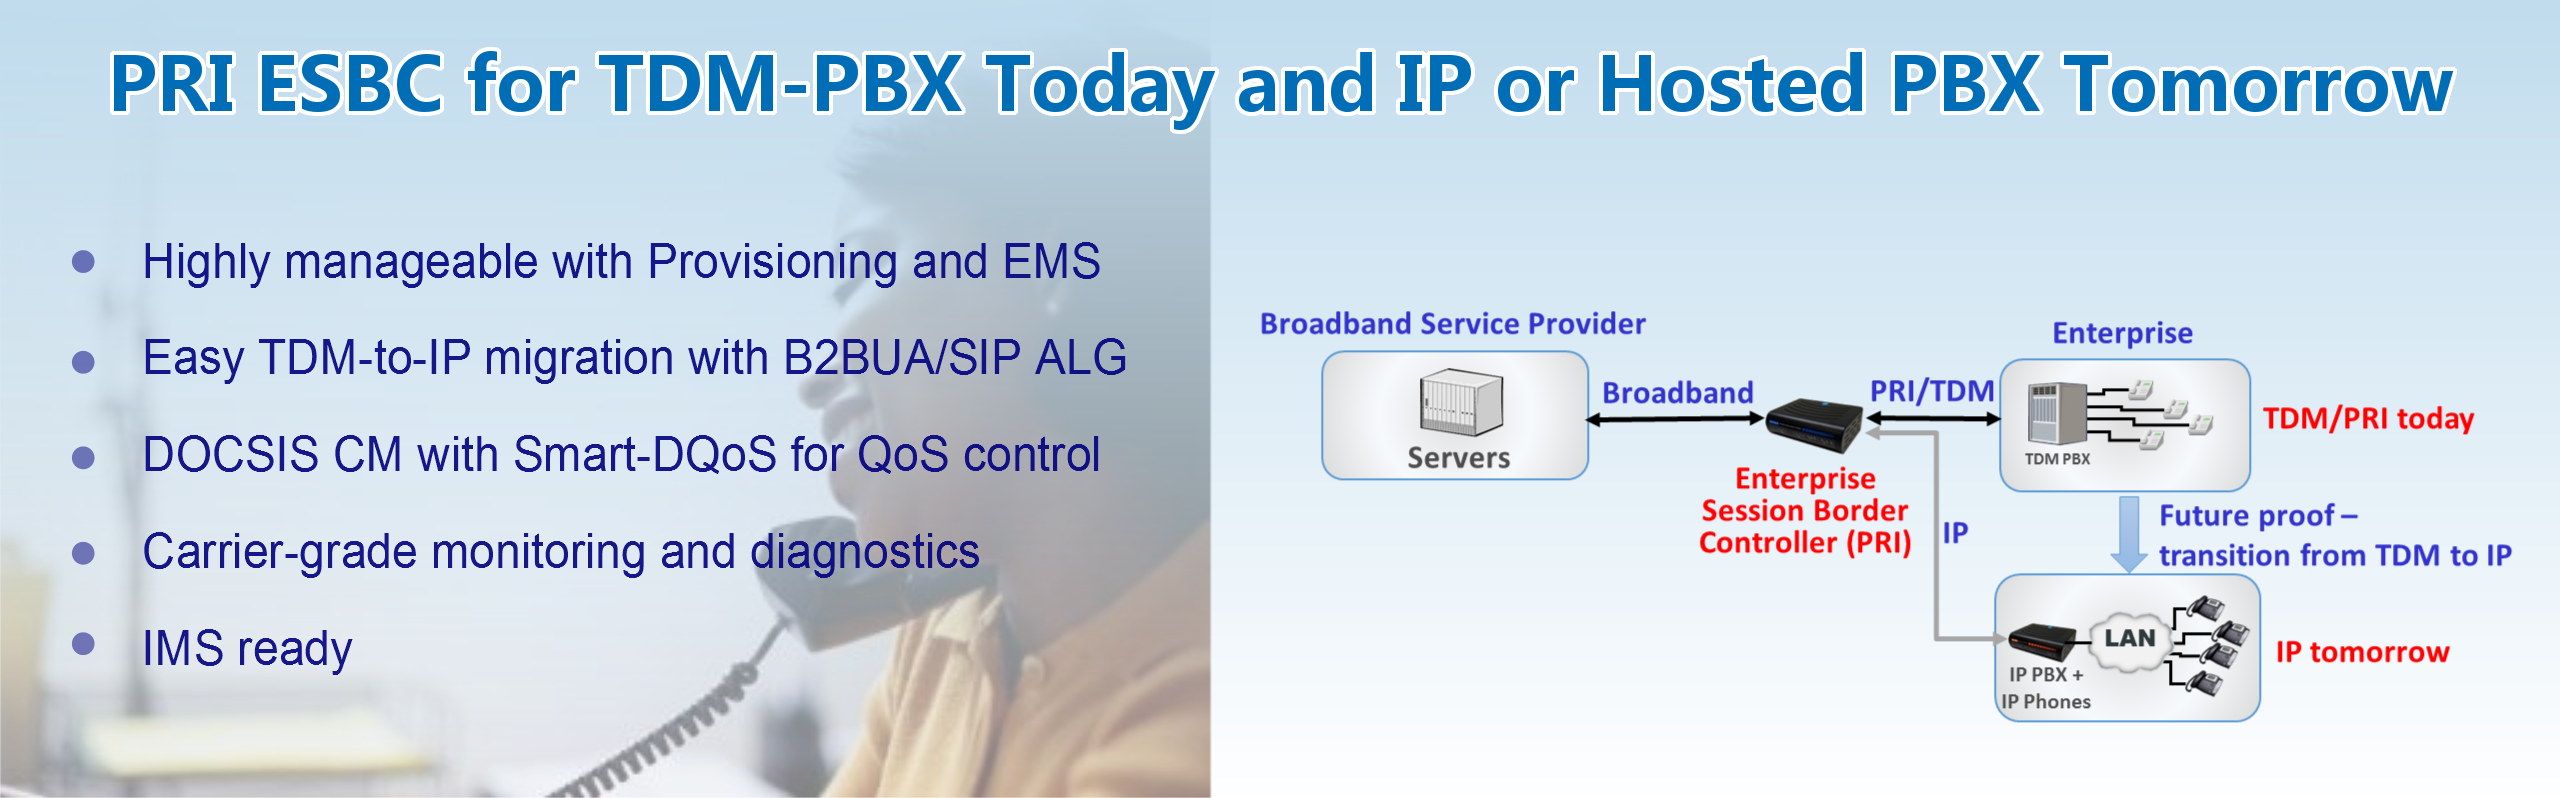 PRI ESBC for TDM-PBX Today and IP or Hosted PBX Tomorrow